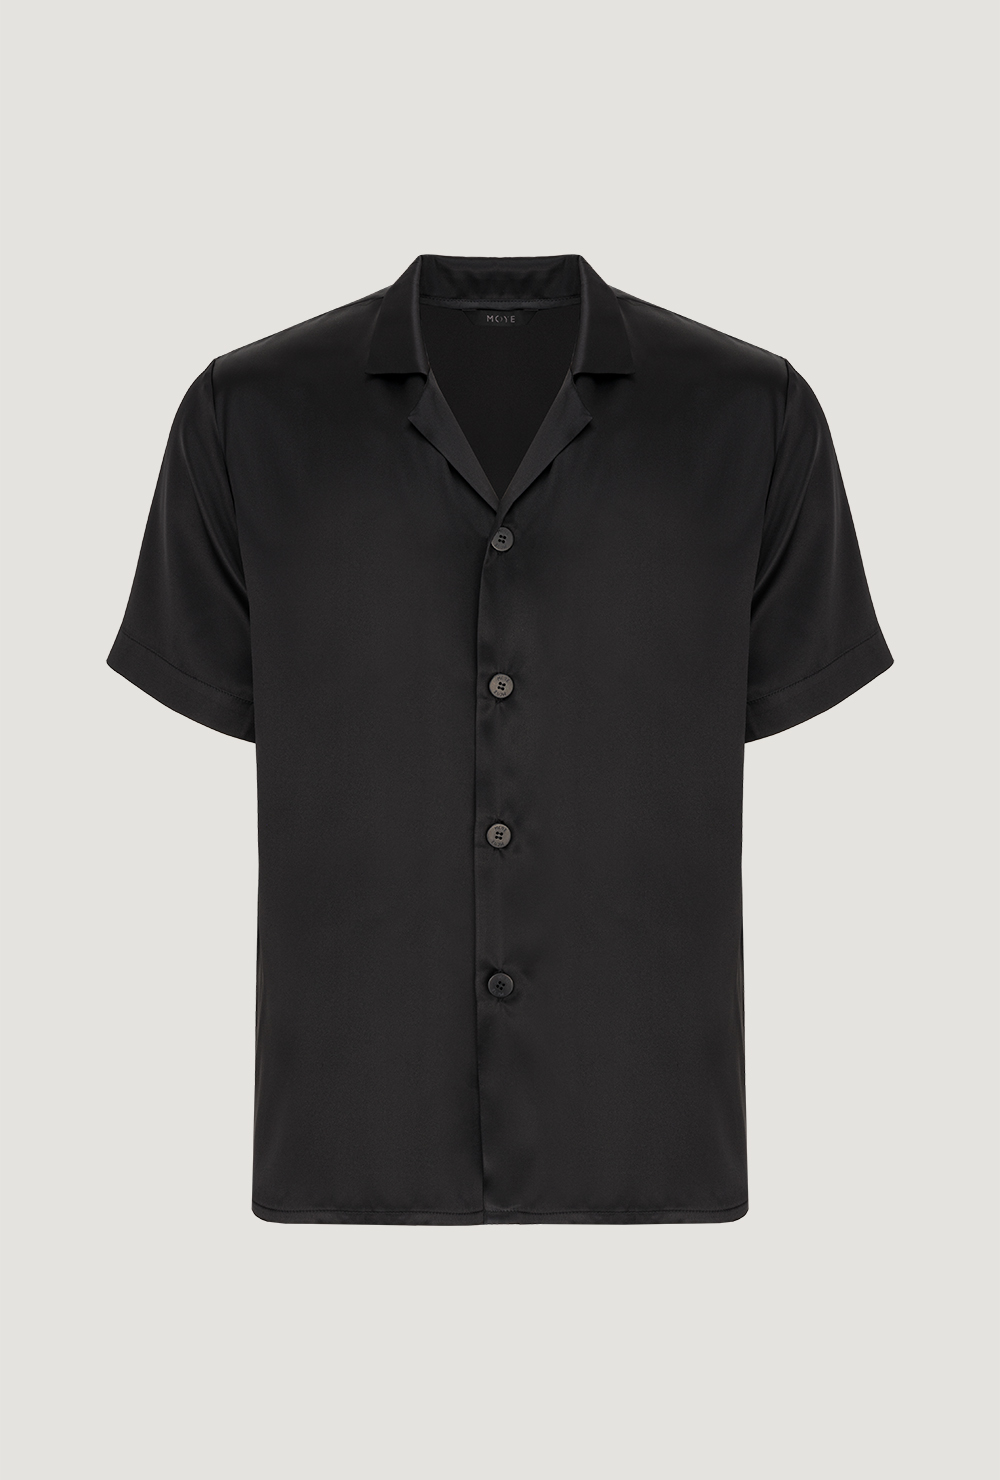 Silk short-sleeved men's shirt made of black satin